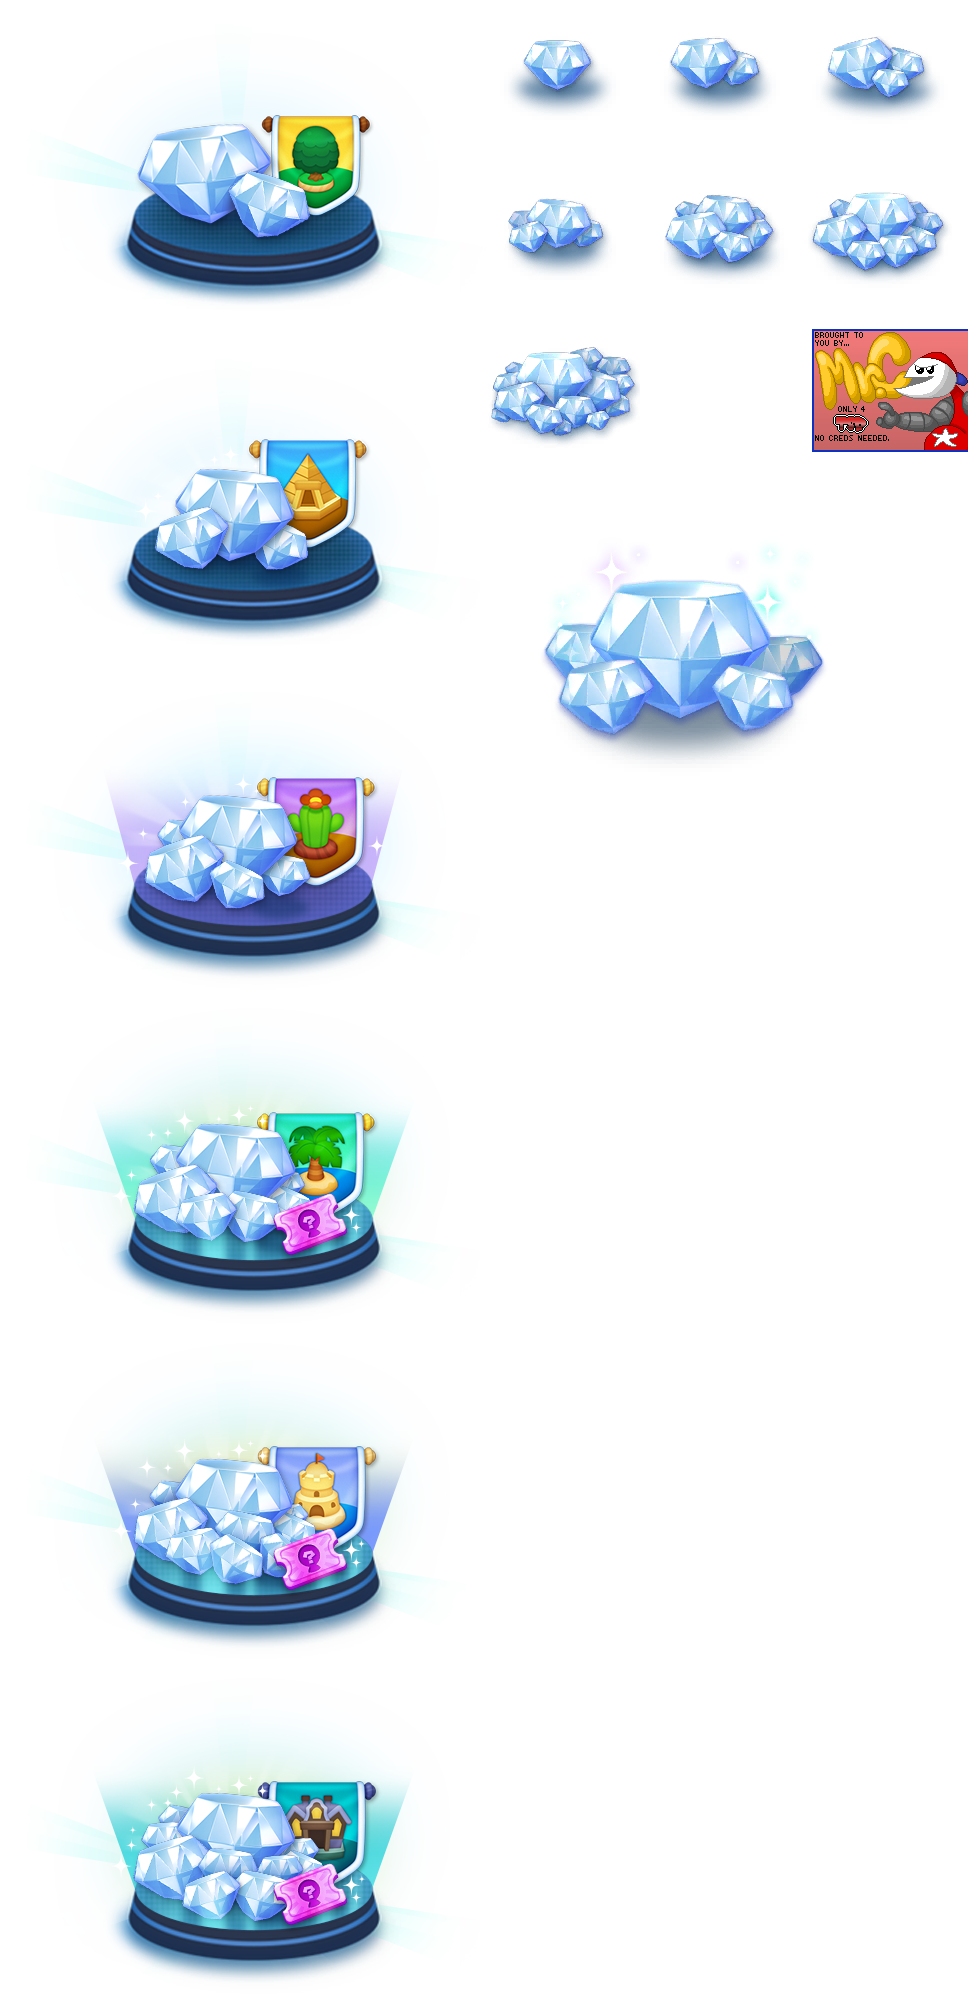 Dr. Mario World - Gems (Shop)